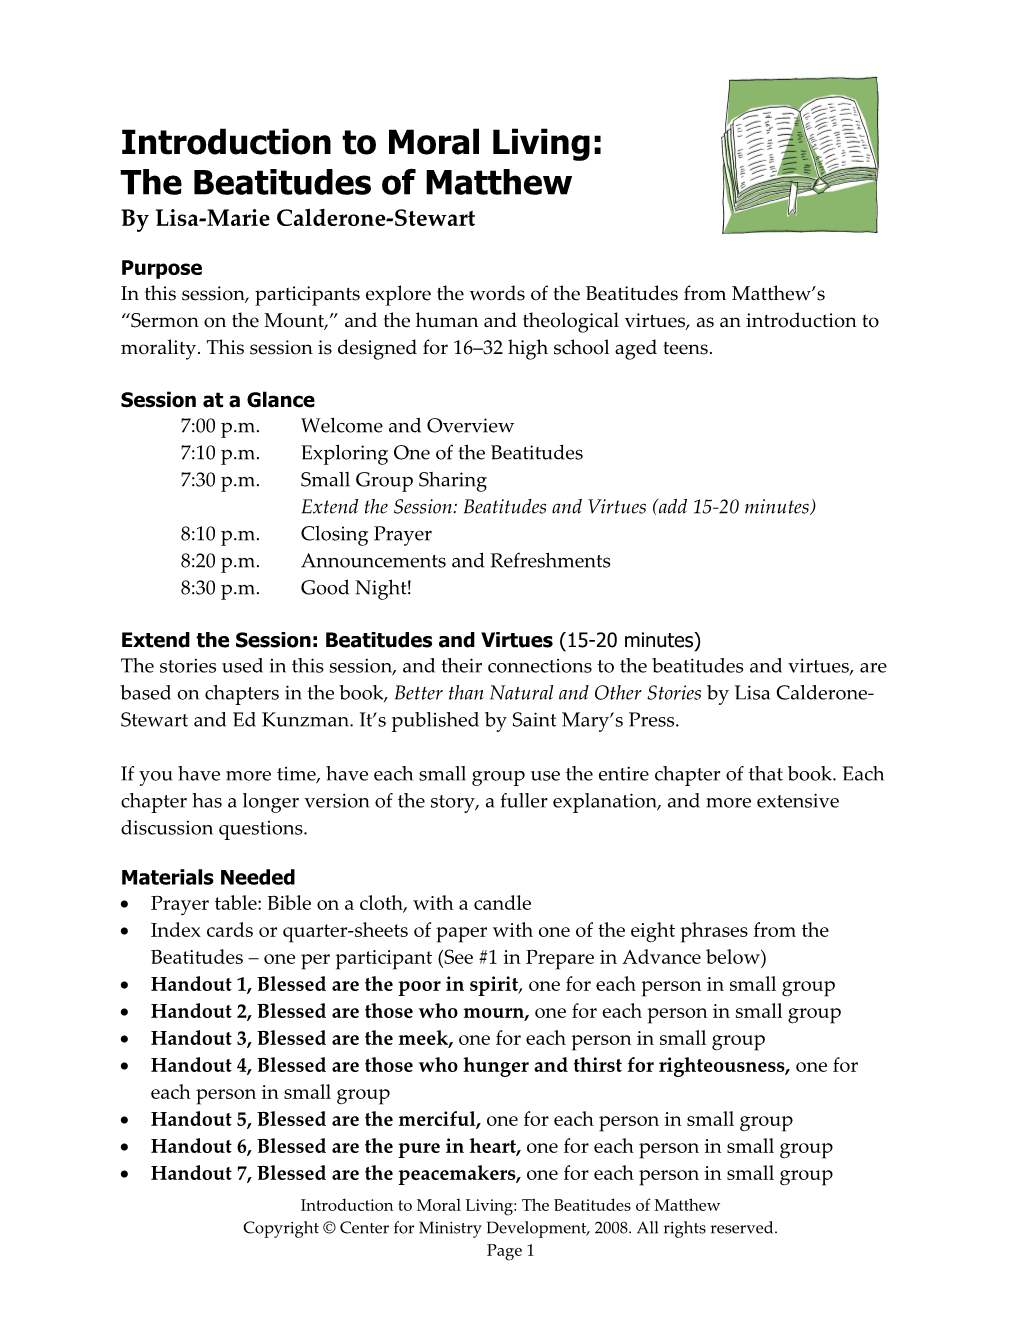 The Beatitudes of Matthew